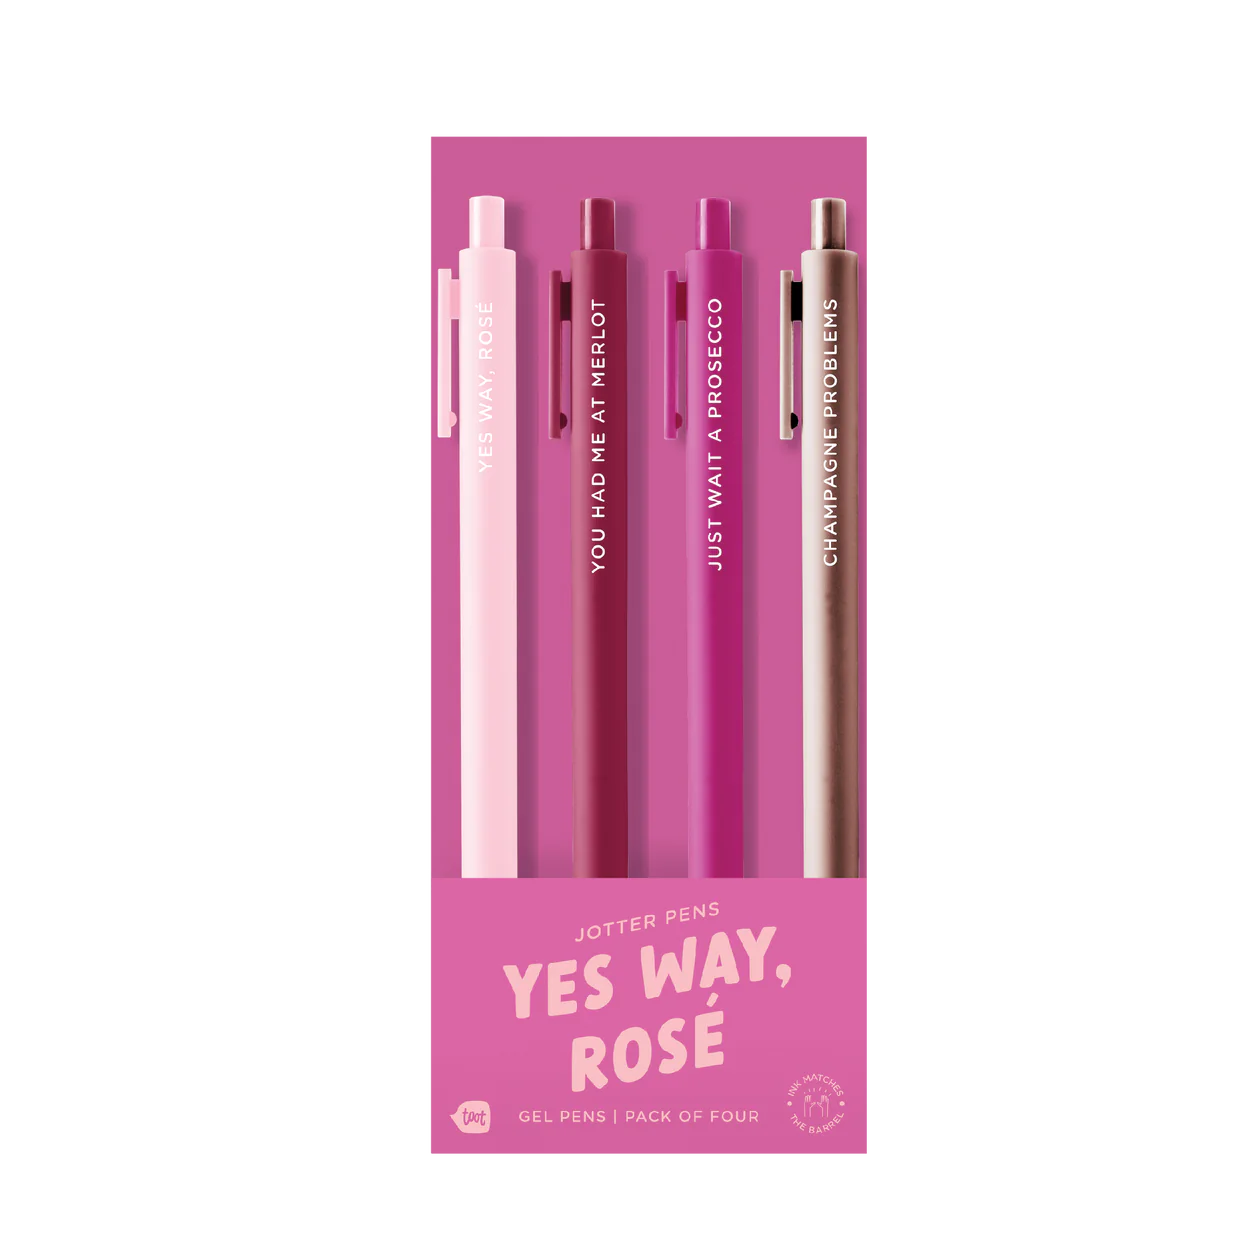 Yes way rose jotter pens set